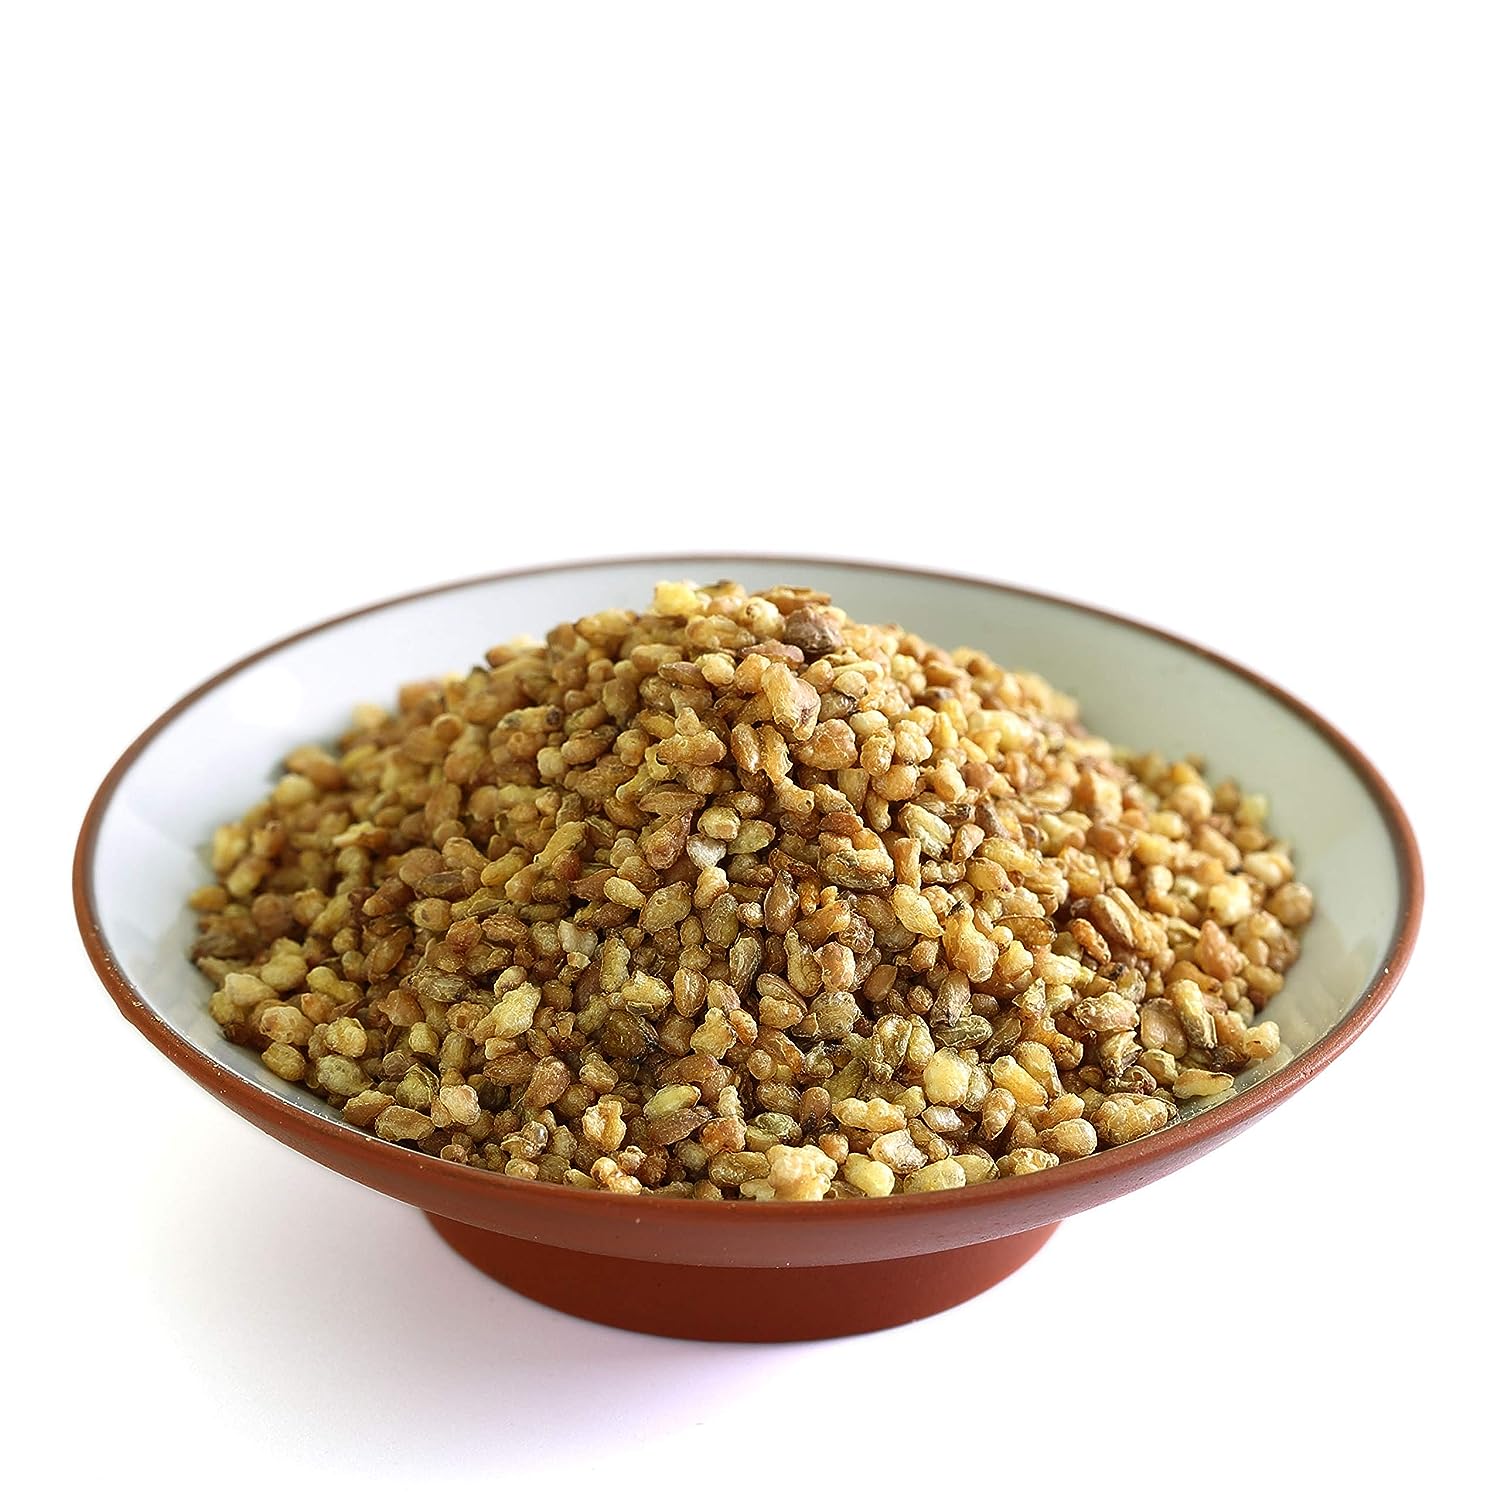 GOARTEA 2Pcs Premium Roasted Tartary Buckwheat Grain Tea - Gold Loose Leaf Herbal Tea - Caffeine Free